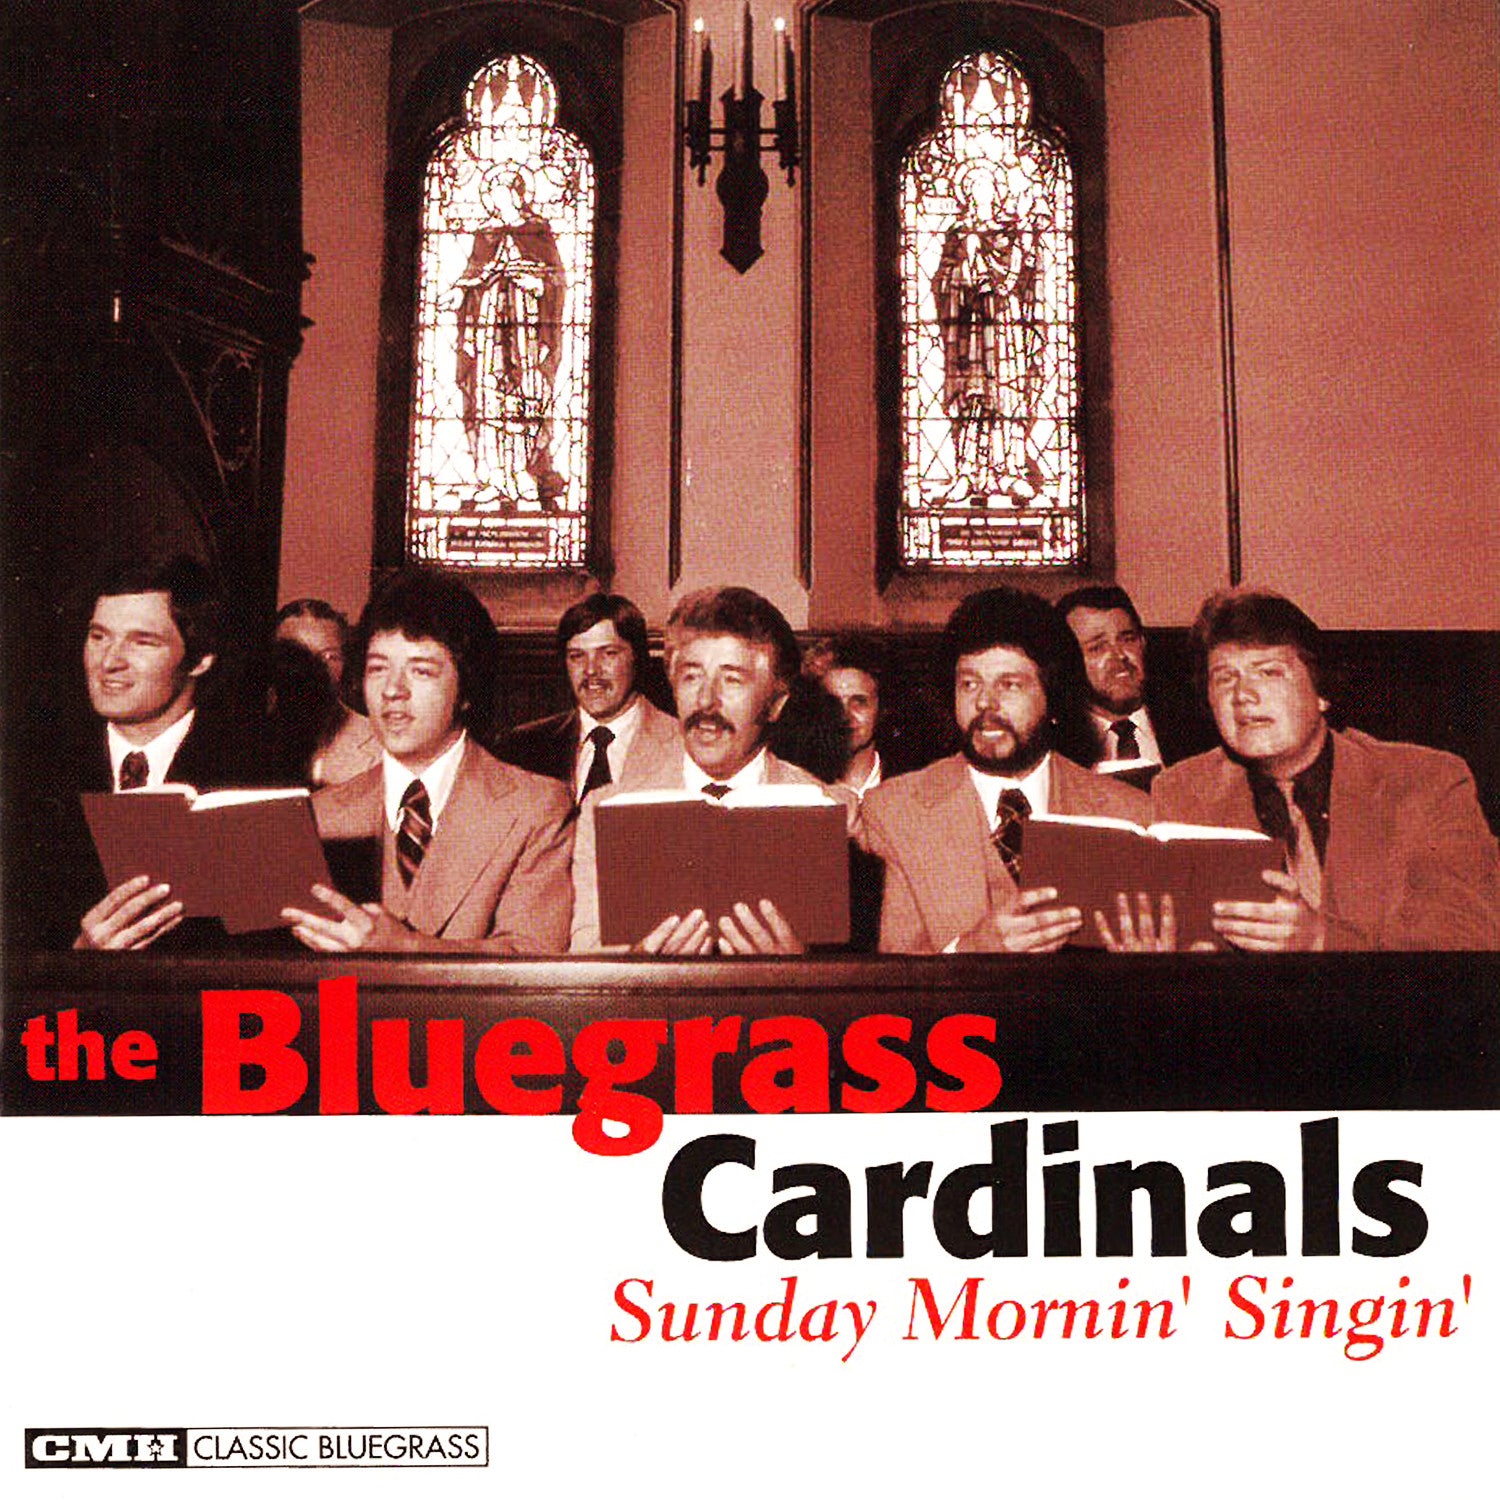 Bluegrass Cardinals songs - Sunday Mornin' Singin album